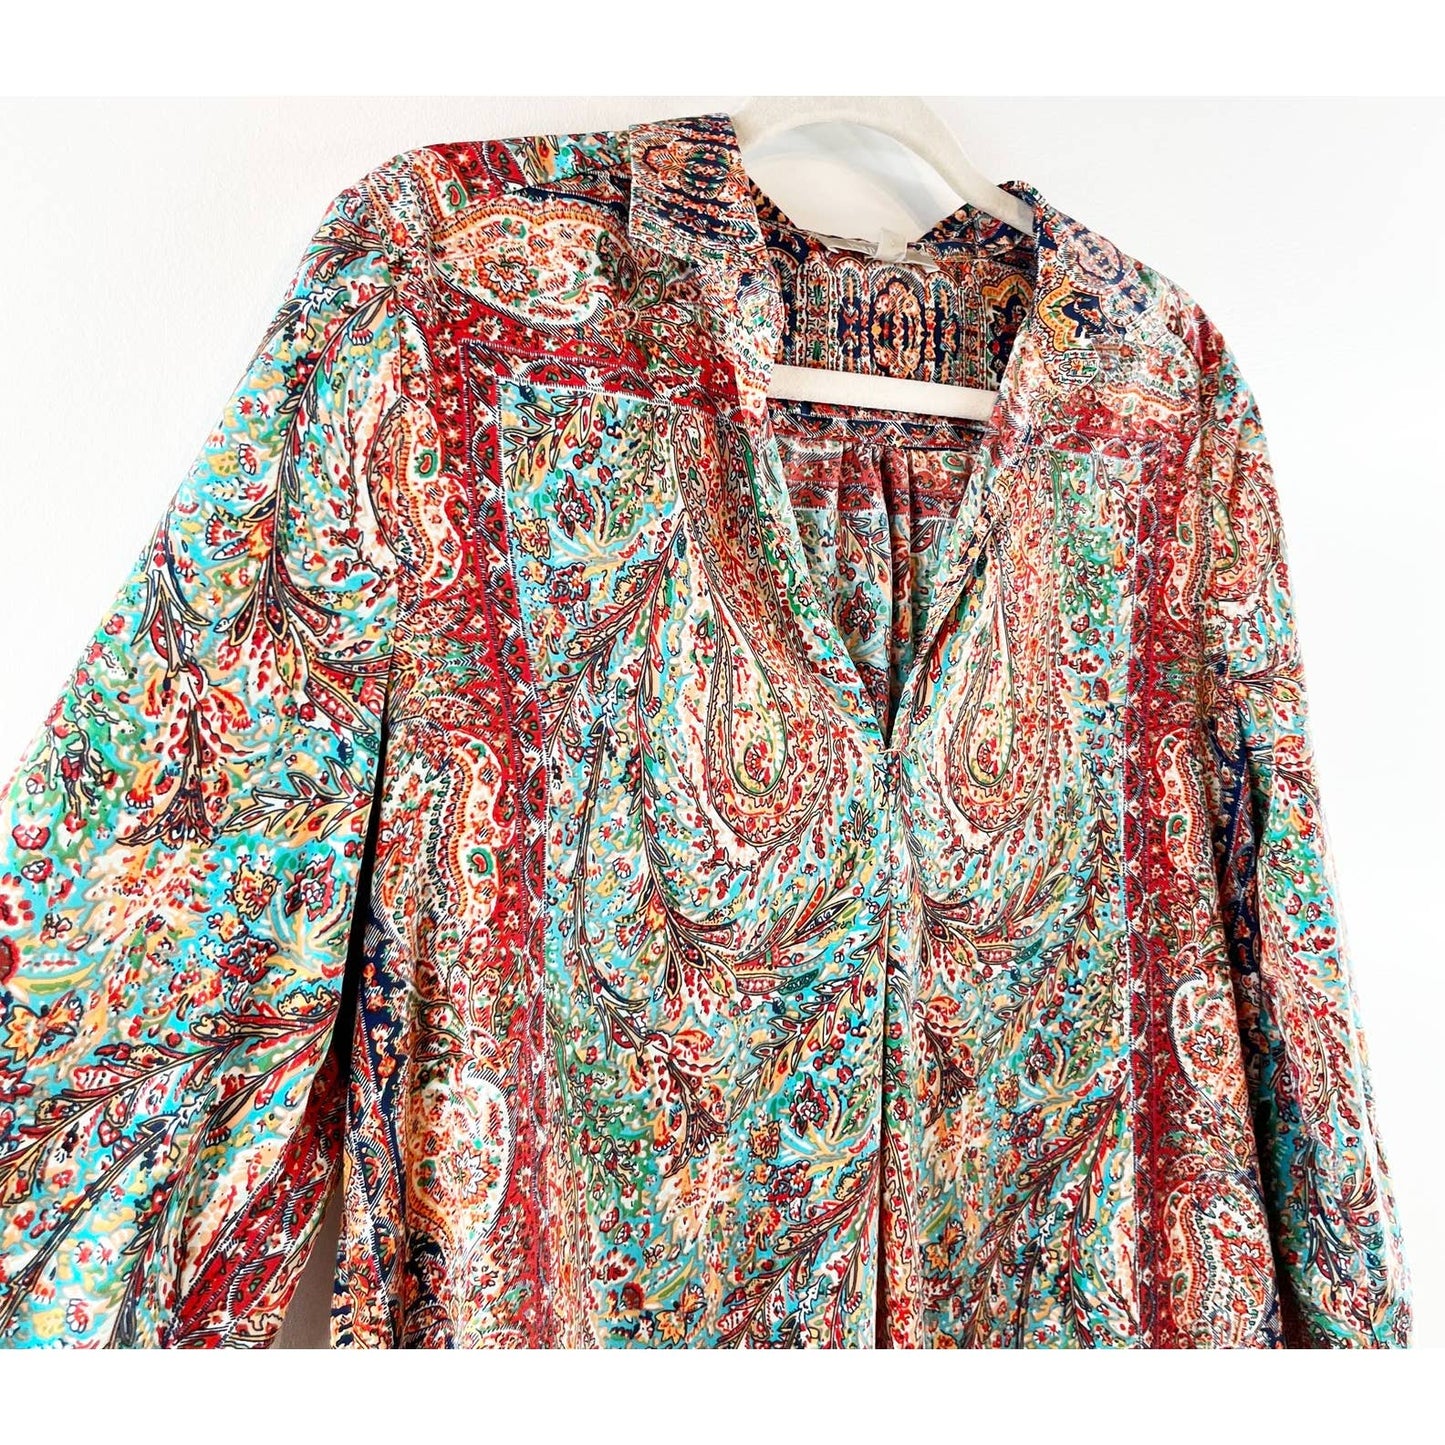 Joan Vass 3/4 Sleeve Boho Paisley V-Neck Tunic Mini Shirt Dress Multicolor Large